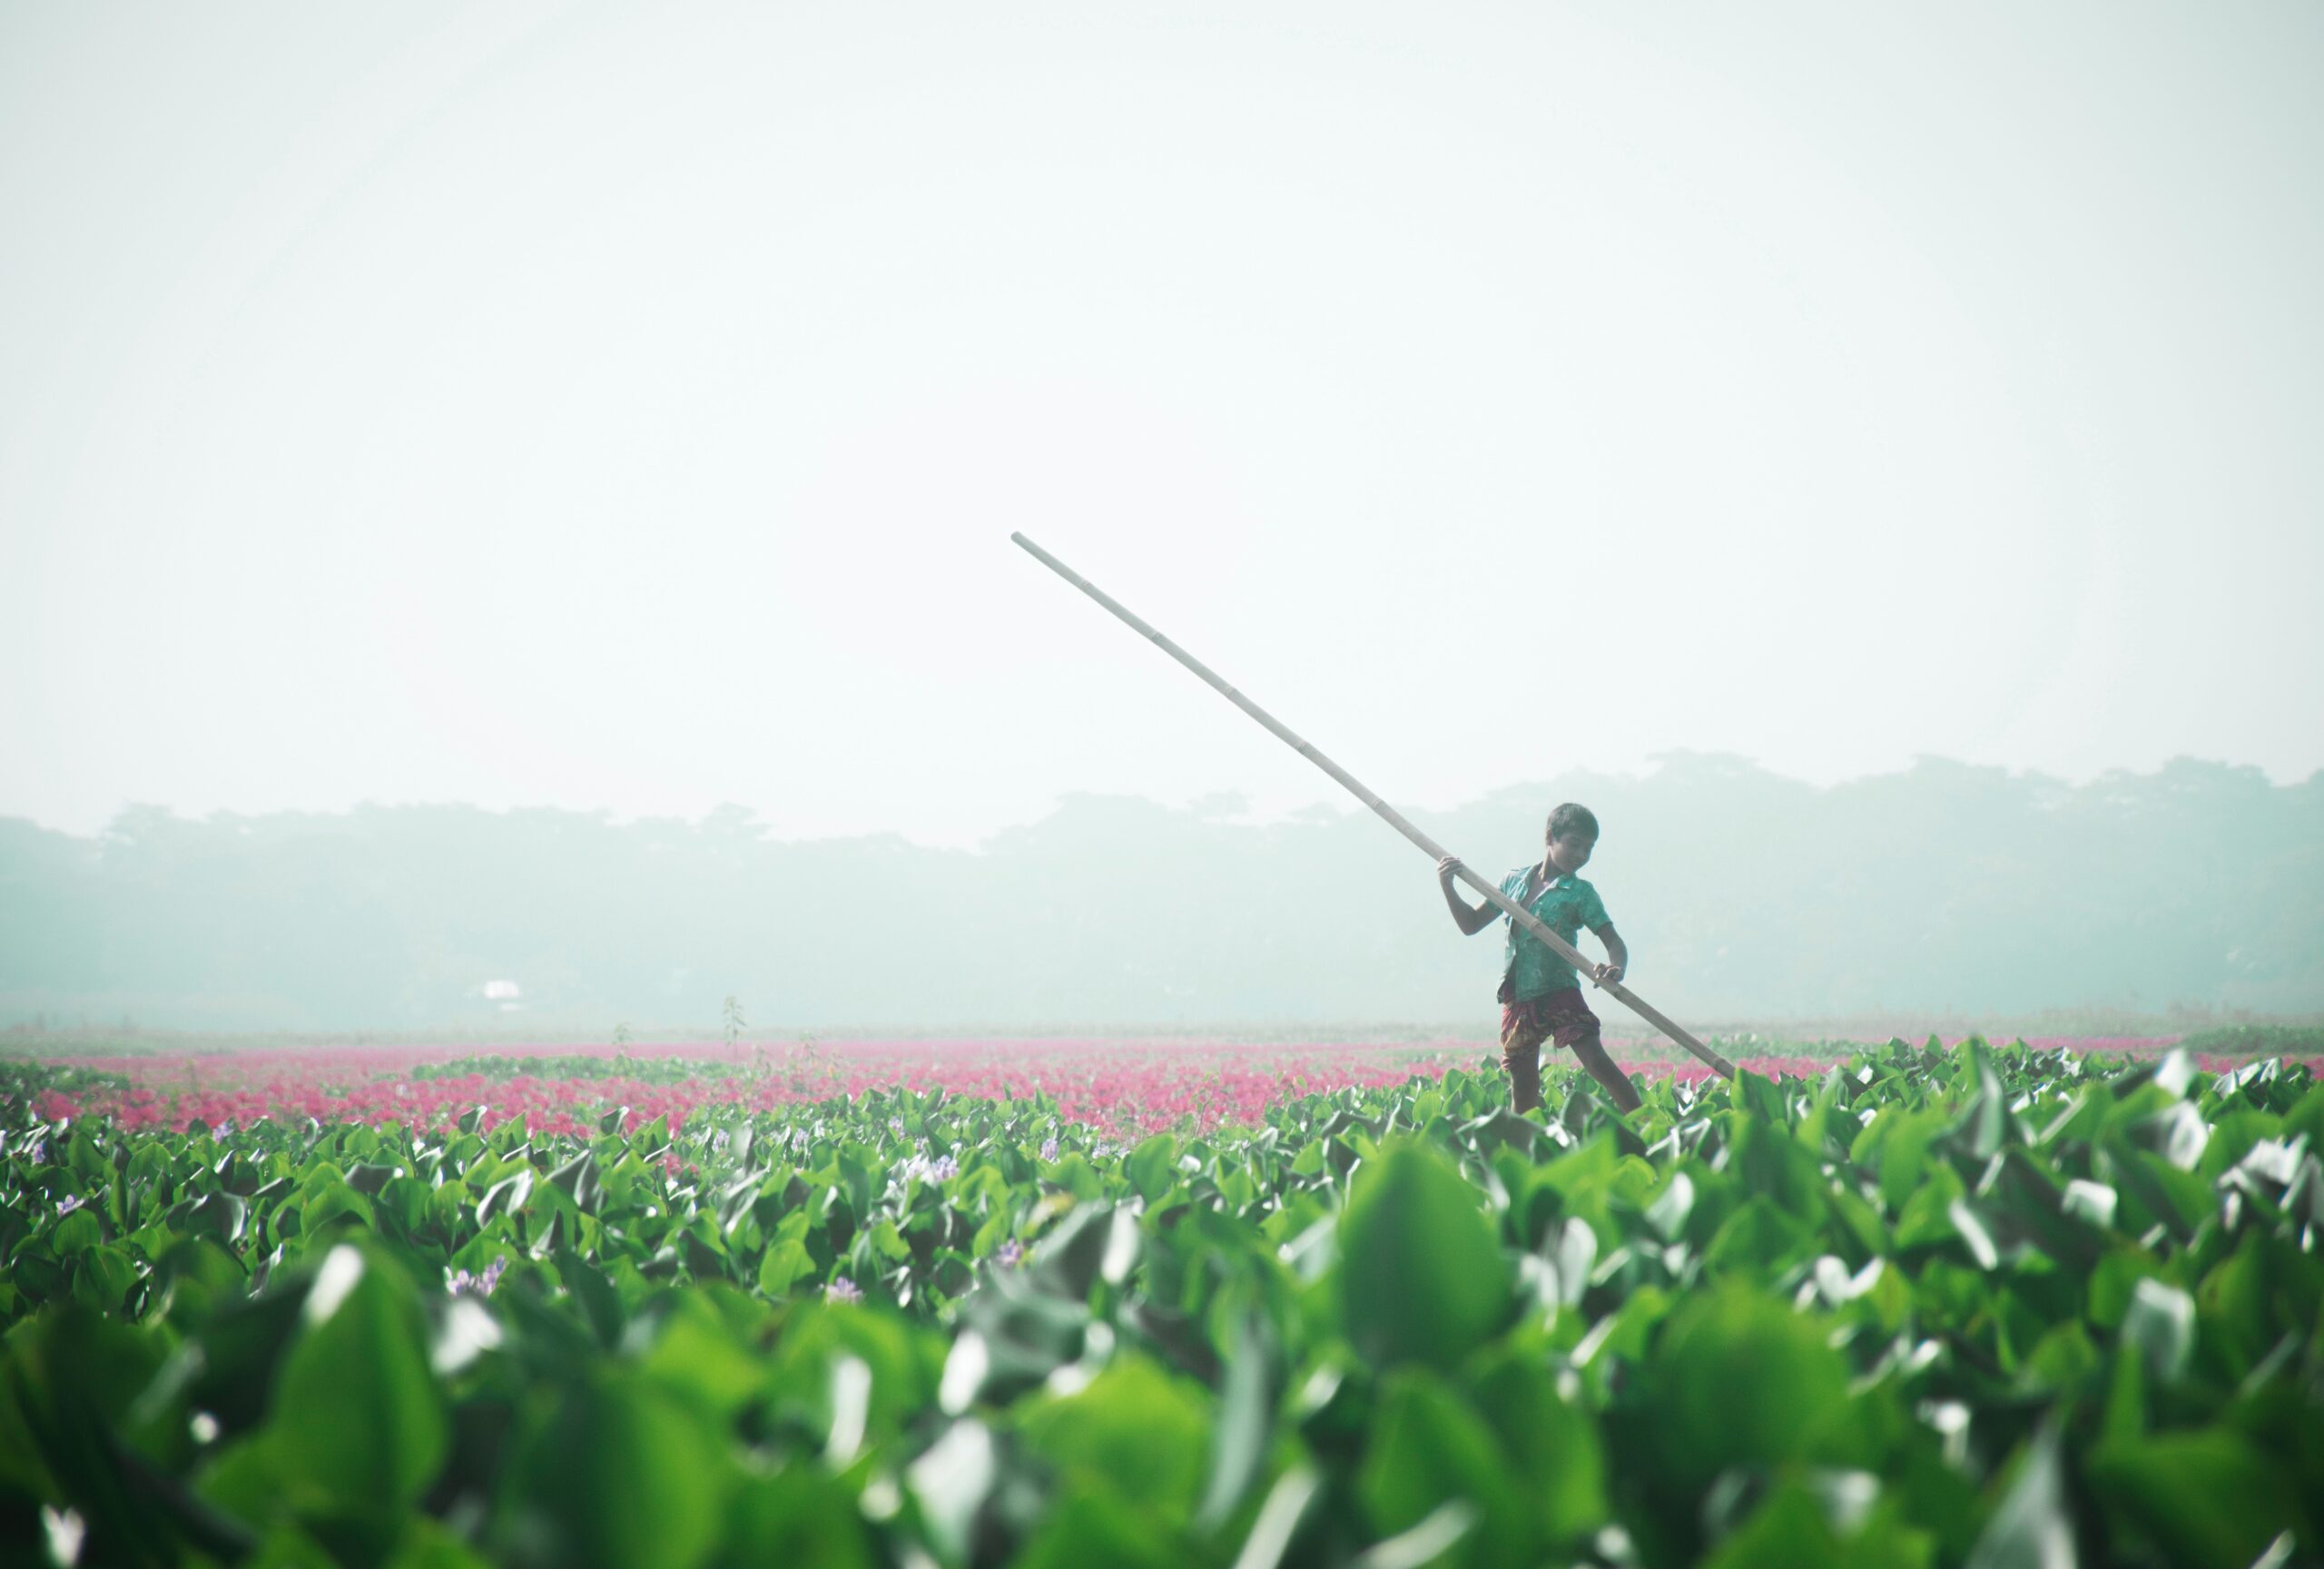 A boy rakes a field of green vegetables